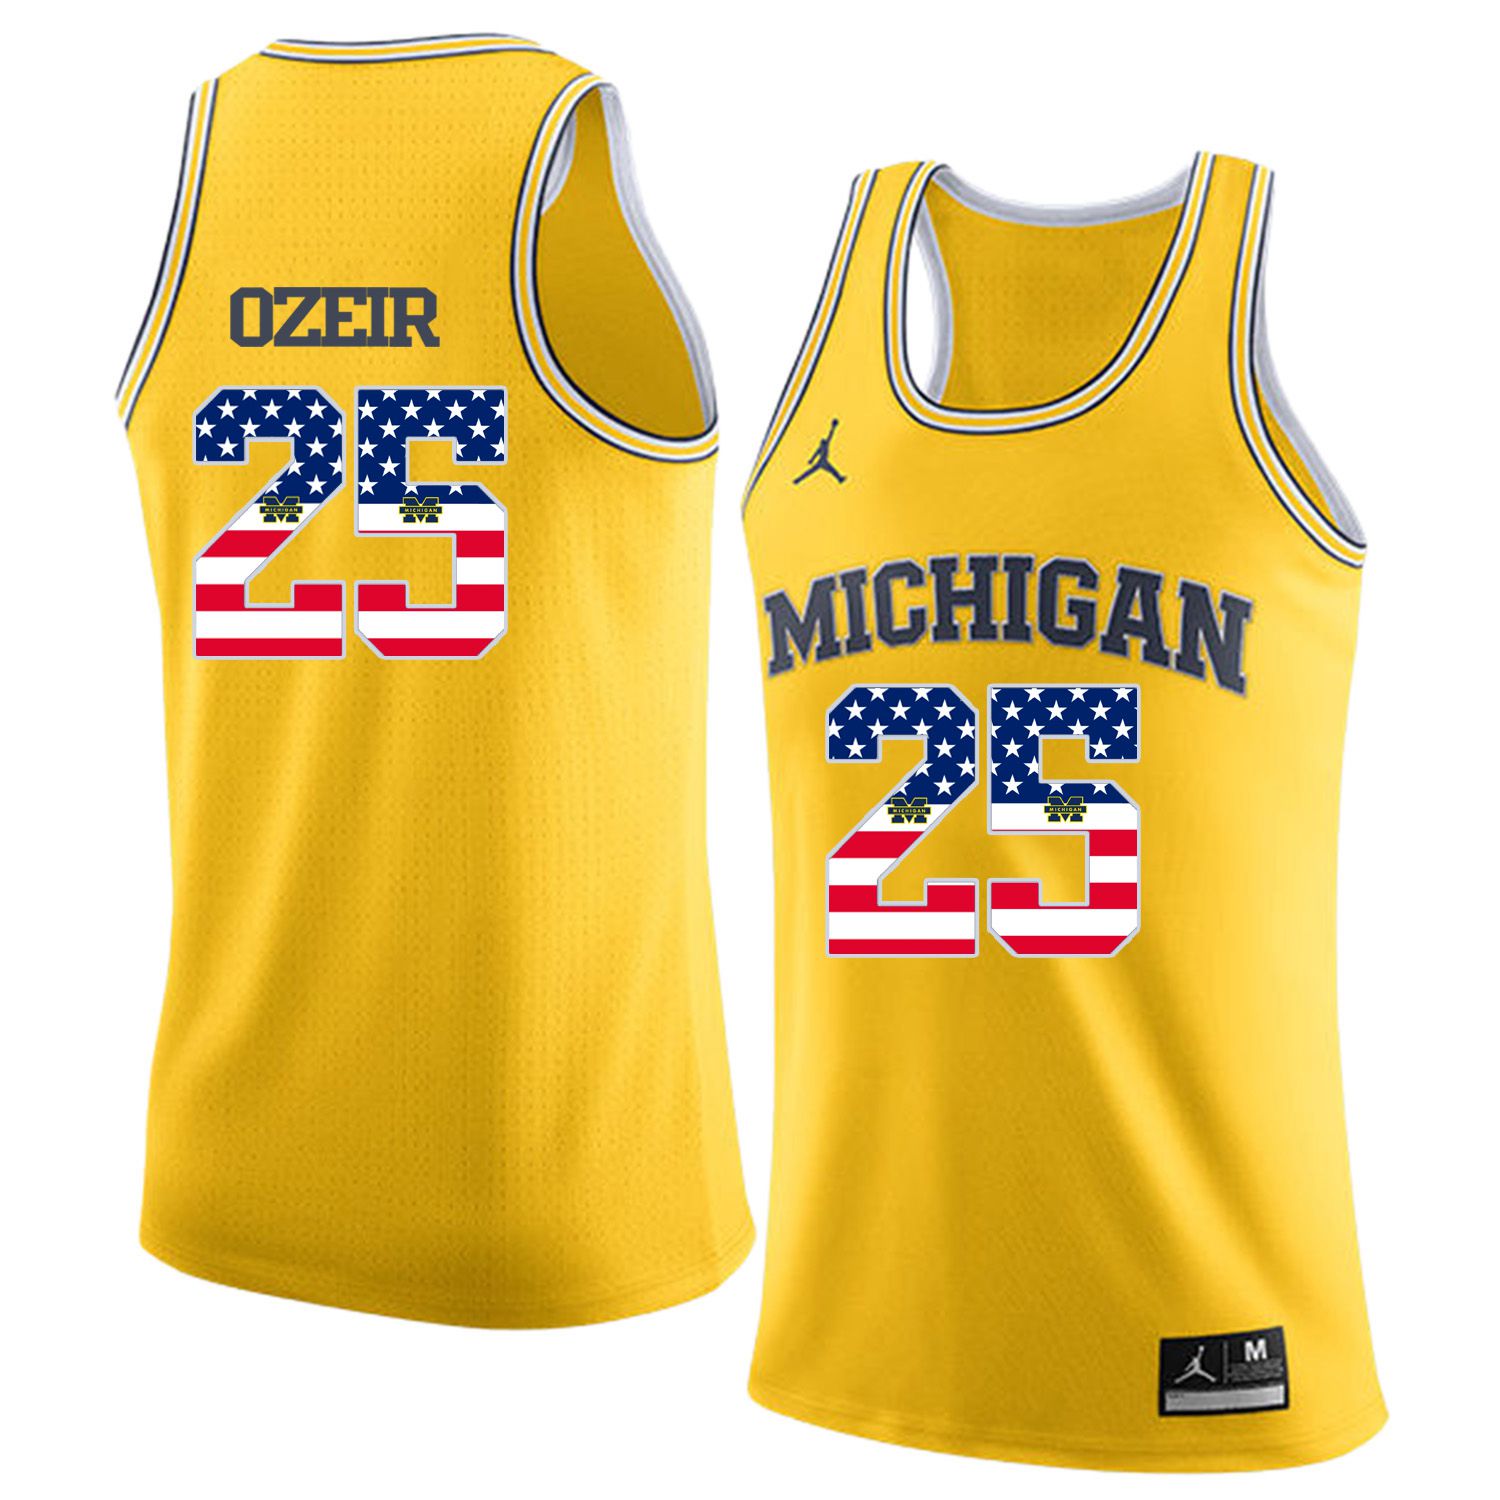 Men Jordan University of Michigan Basketball Yellow #25 Ozeir Flag Customized NCAA Jerseys